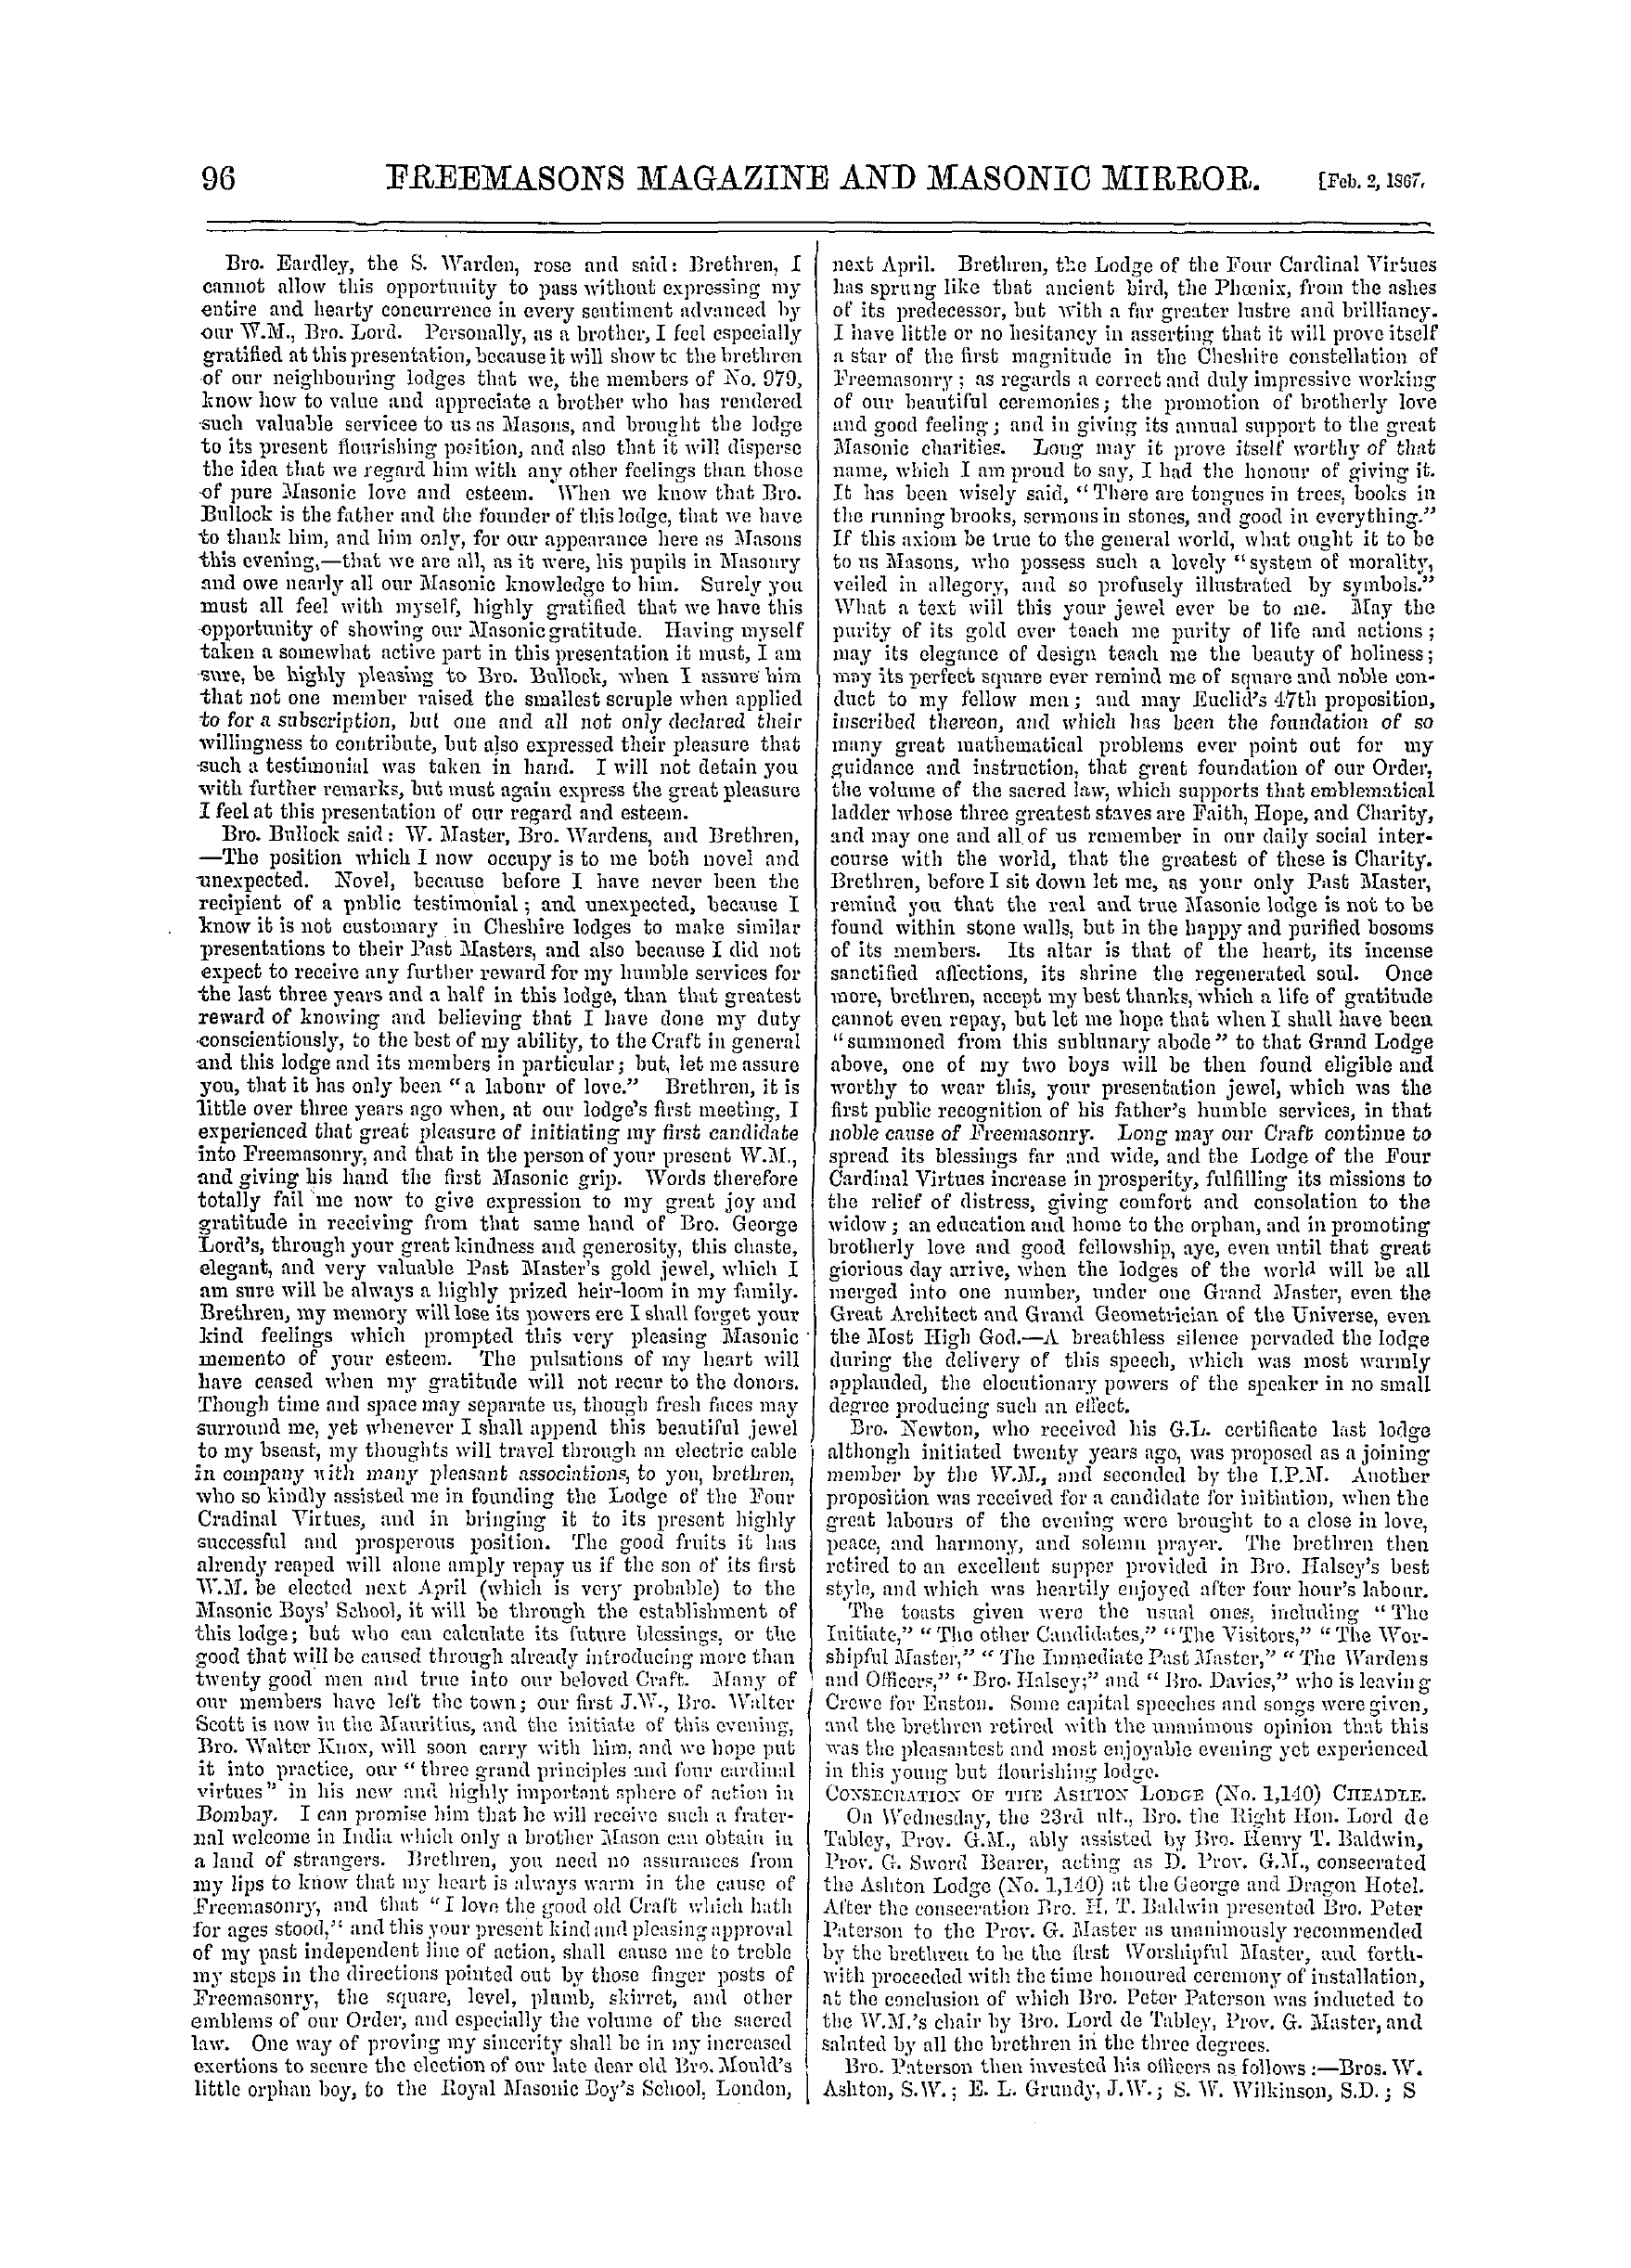 The Freemasons' Monthly Magazine: 1867-02-02 - Metropolitan.